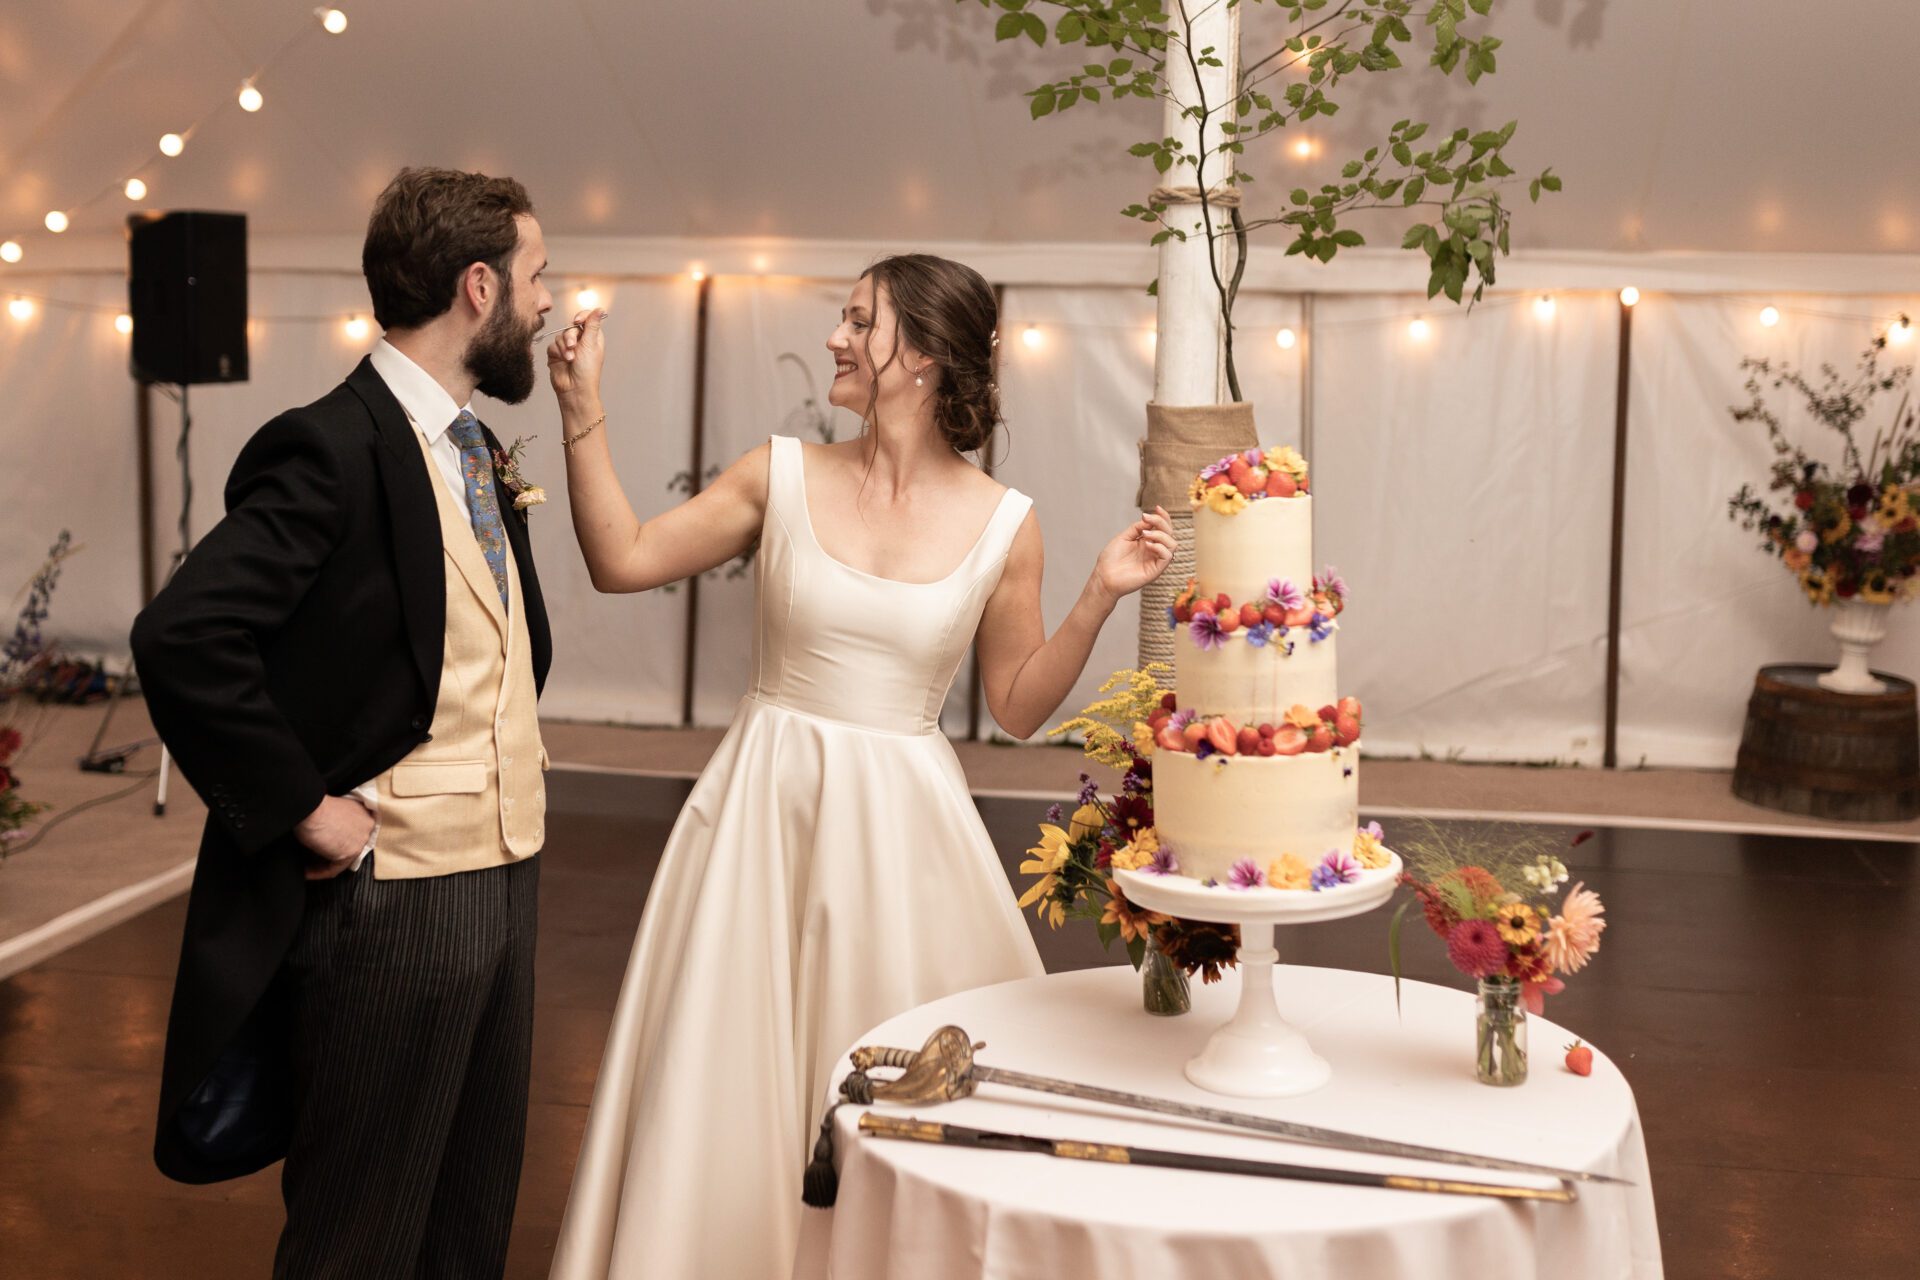 The bride and groom enjoy their wedding cake